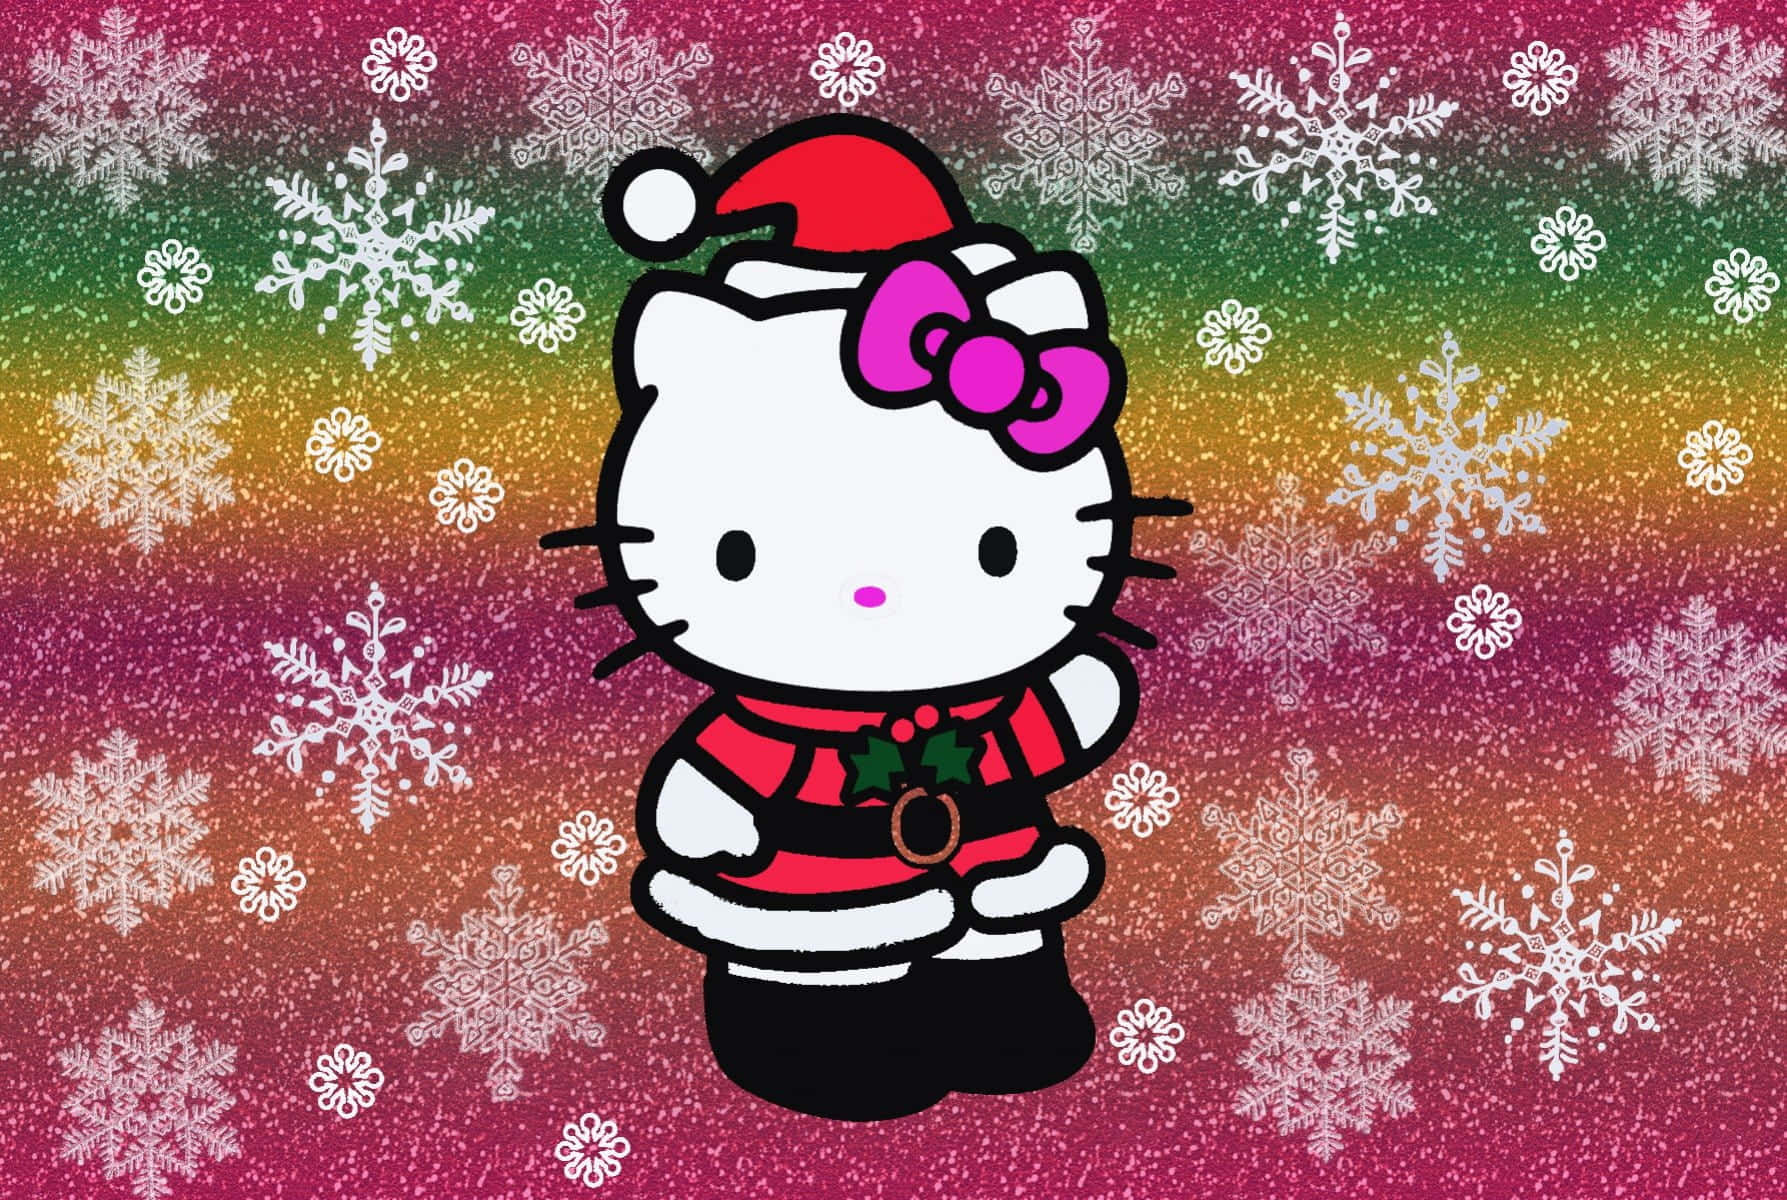 Pastele Best hello kitty christmas iphone wallpaper Custom